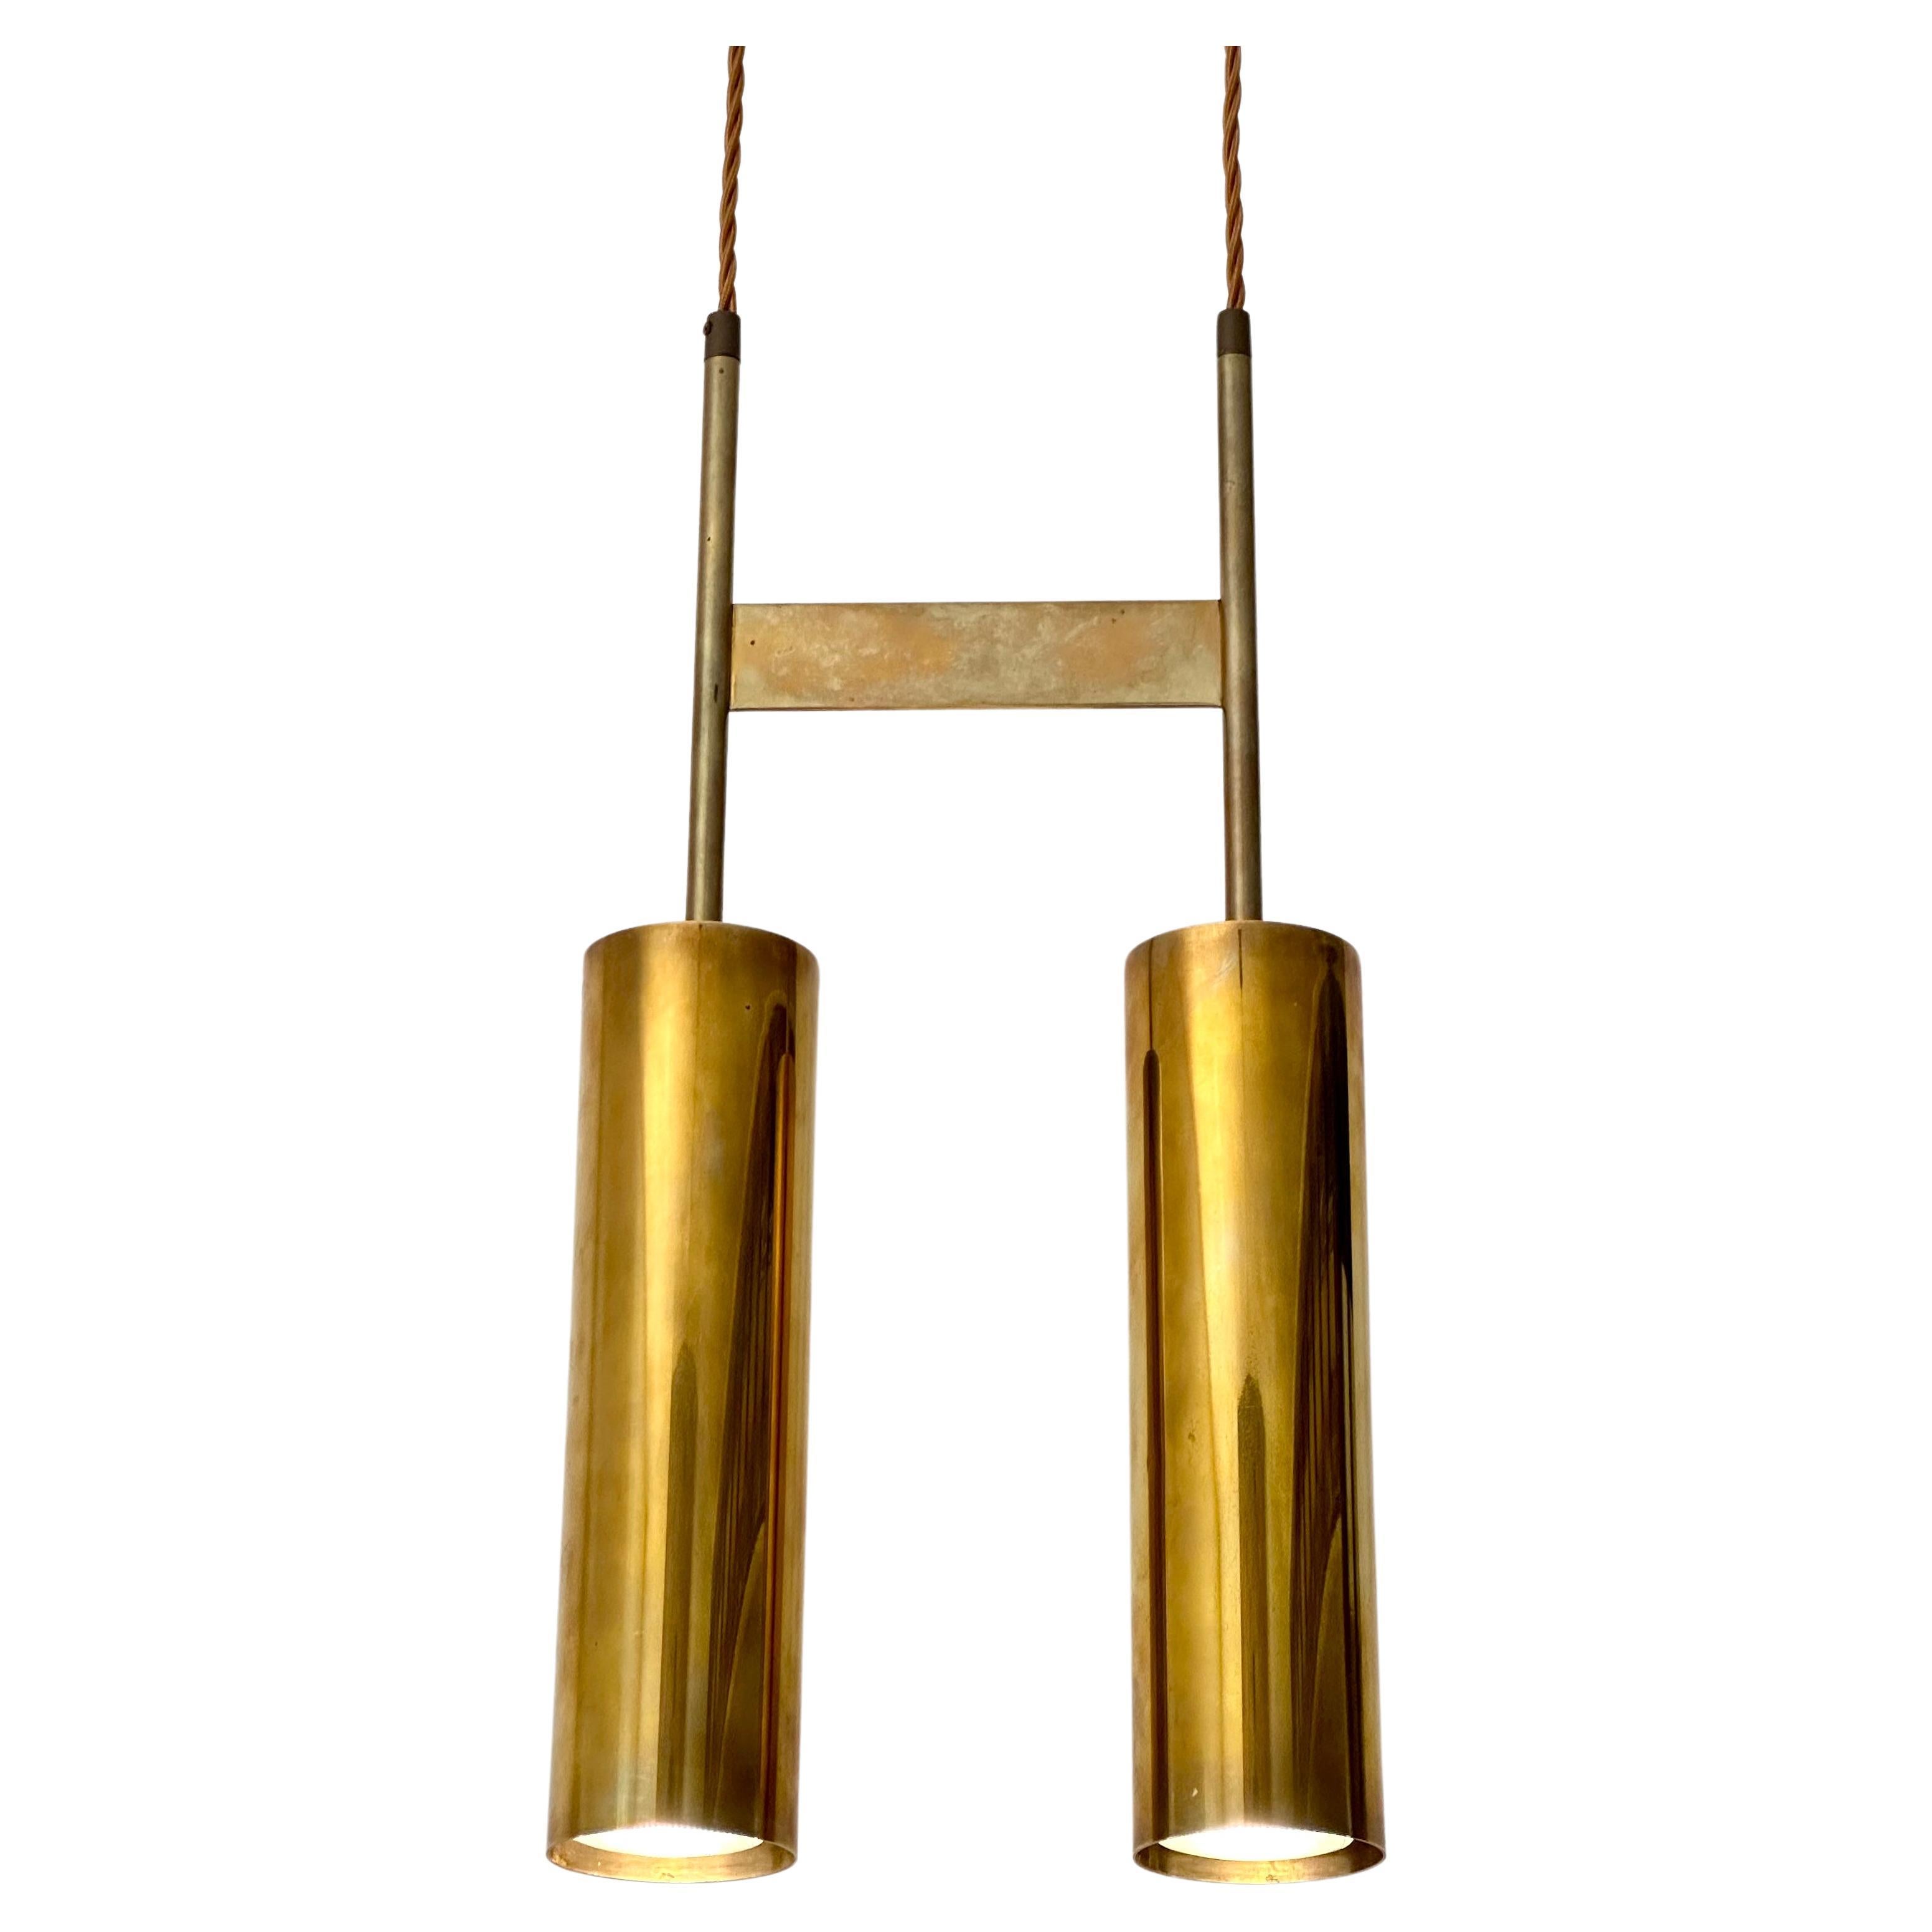 Modernist Solid Brass Double Cylinder Pendant Light Fixture, 1960s 